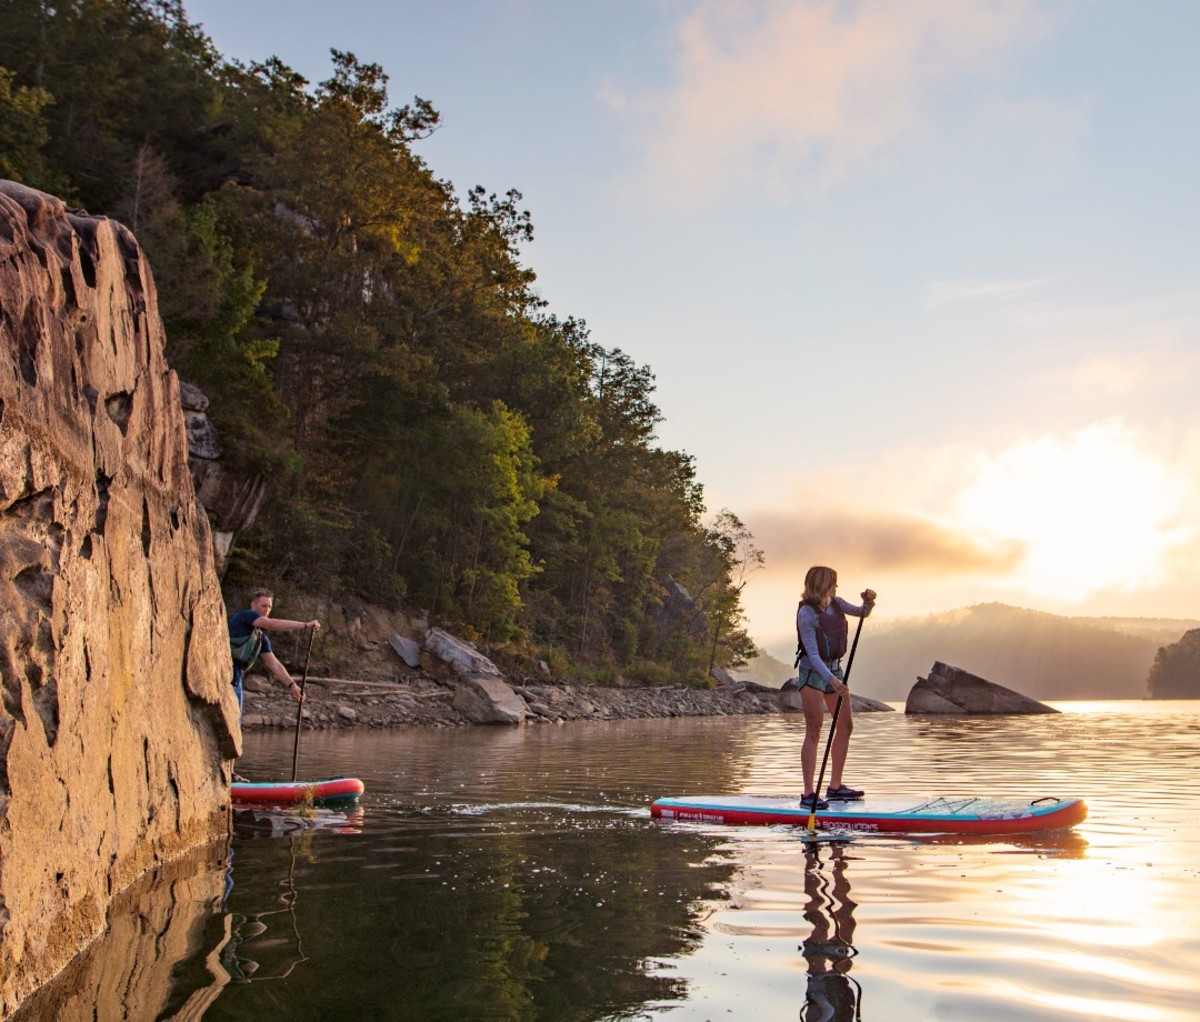 Man and woman standup paddle boarding on lake at sunset